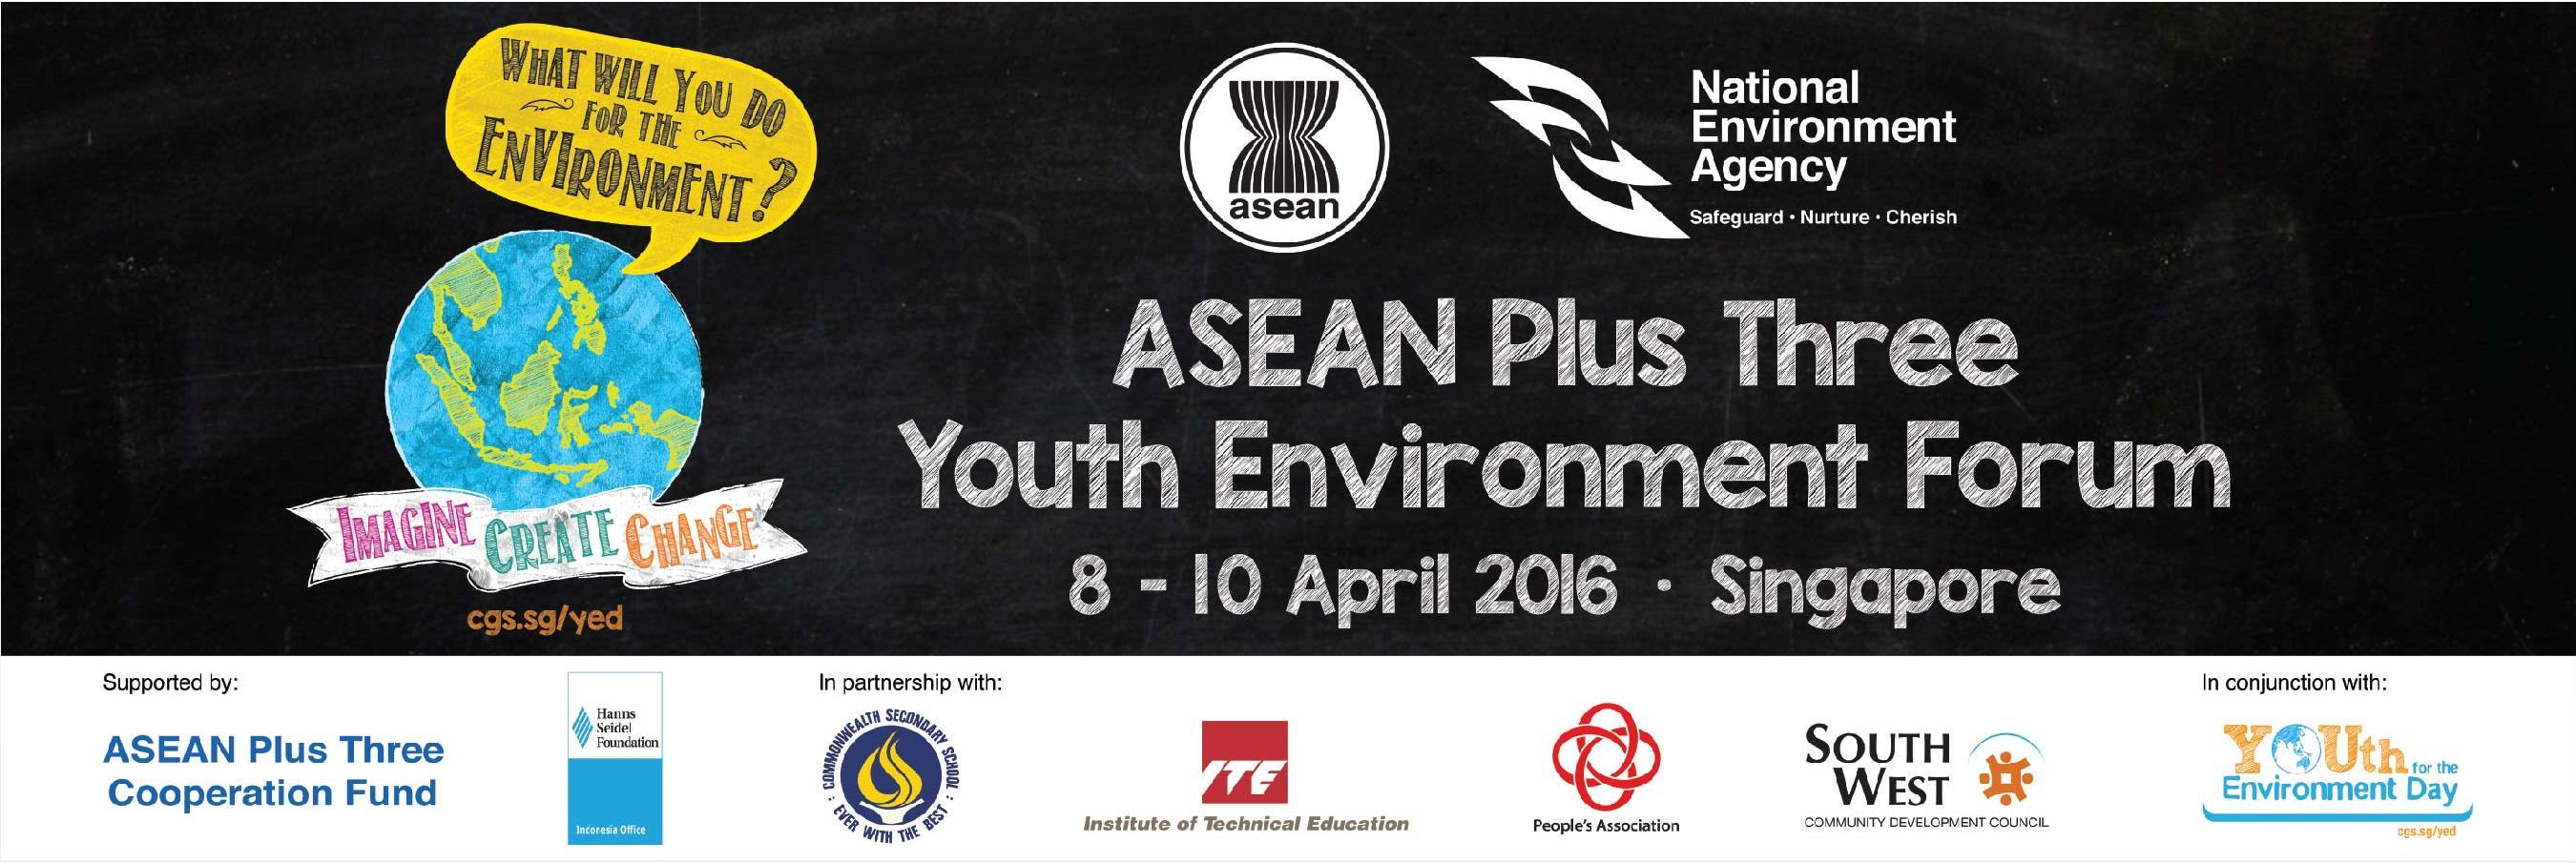 NEA_AYEF Forum 2016_PVC Banner_B2_edit 5